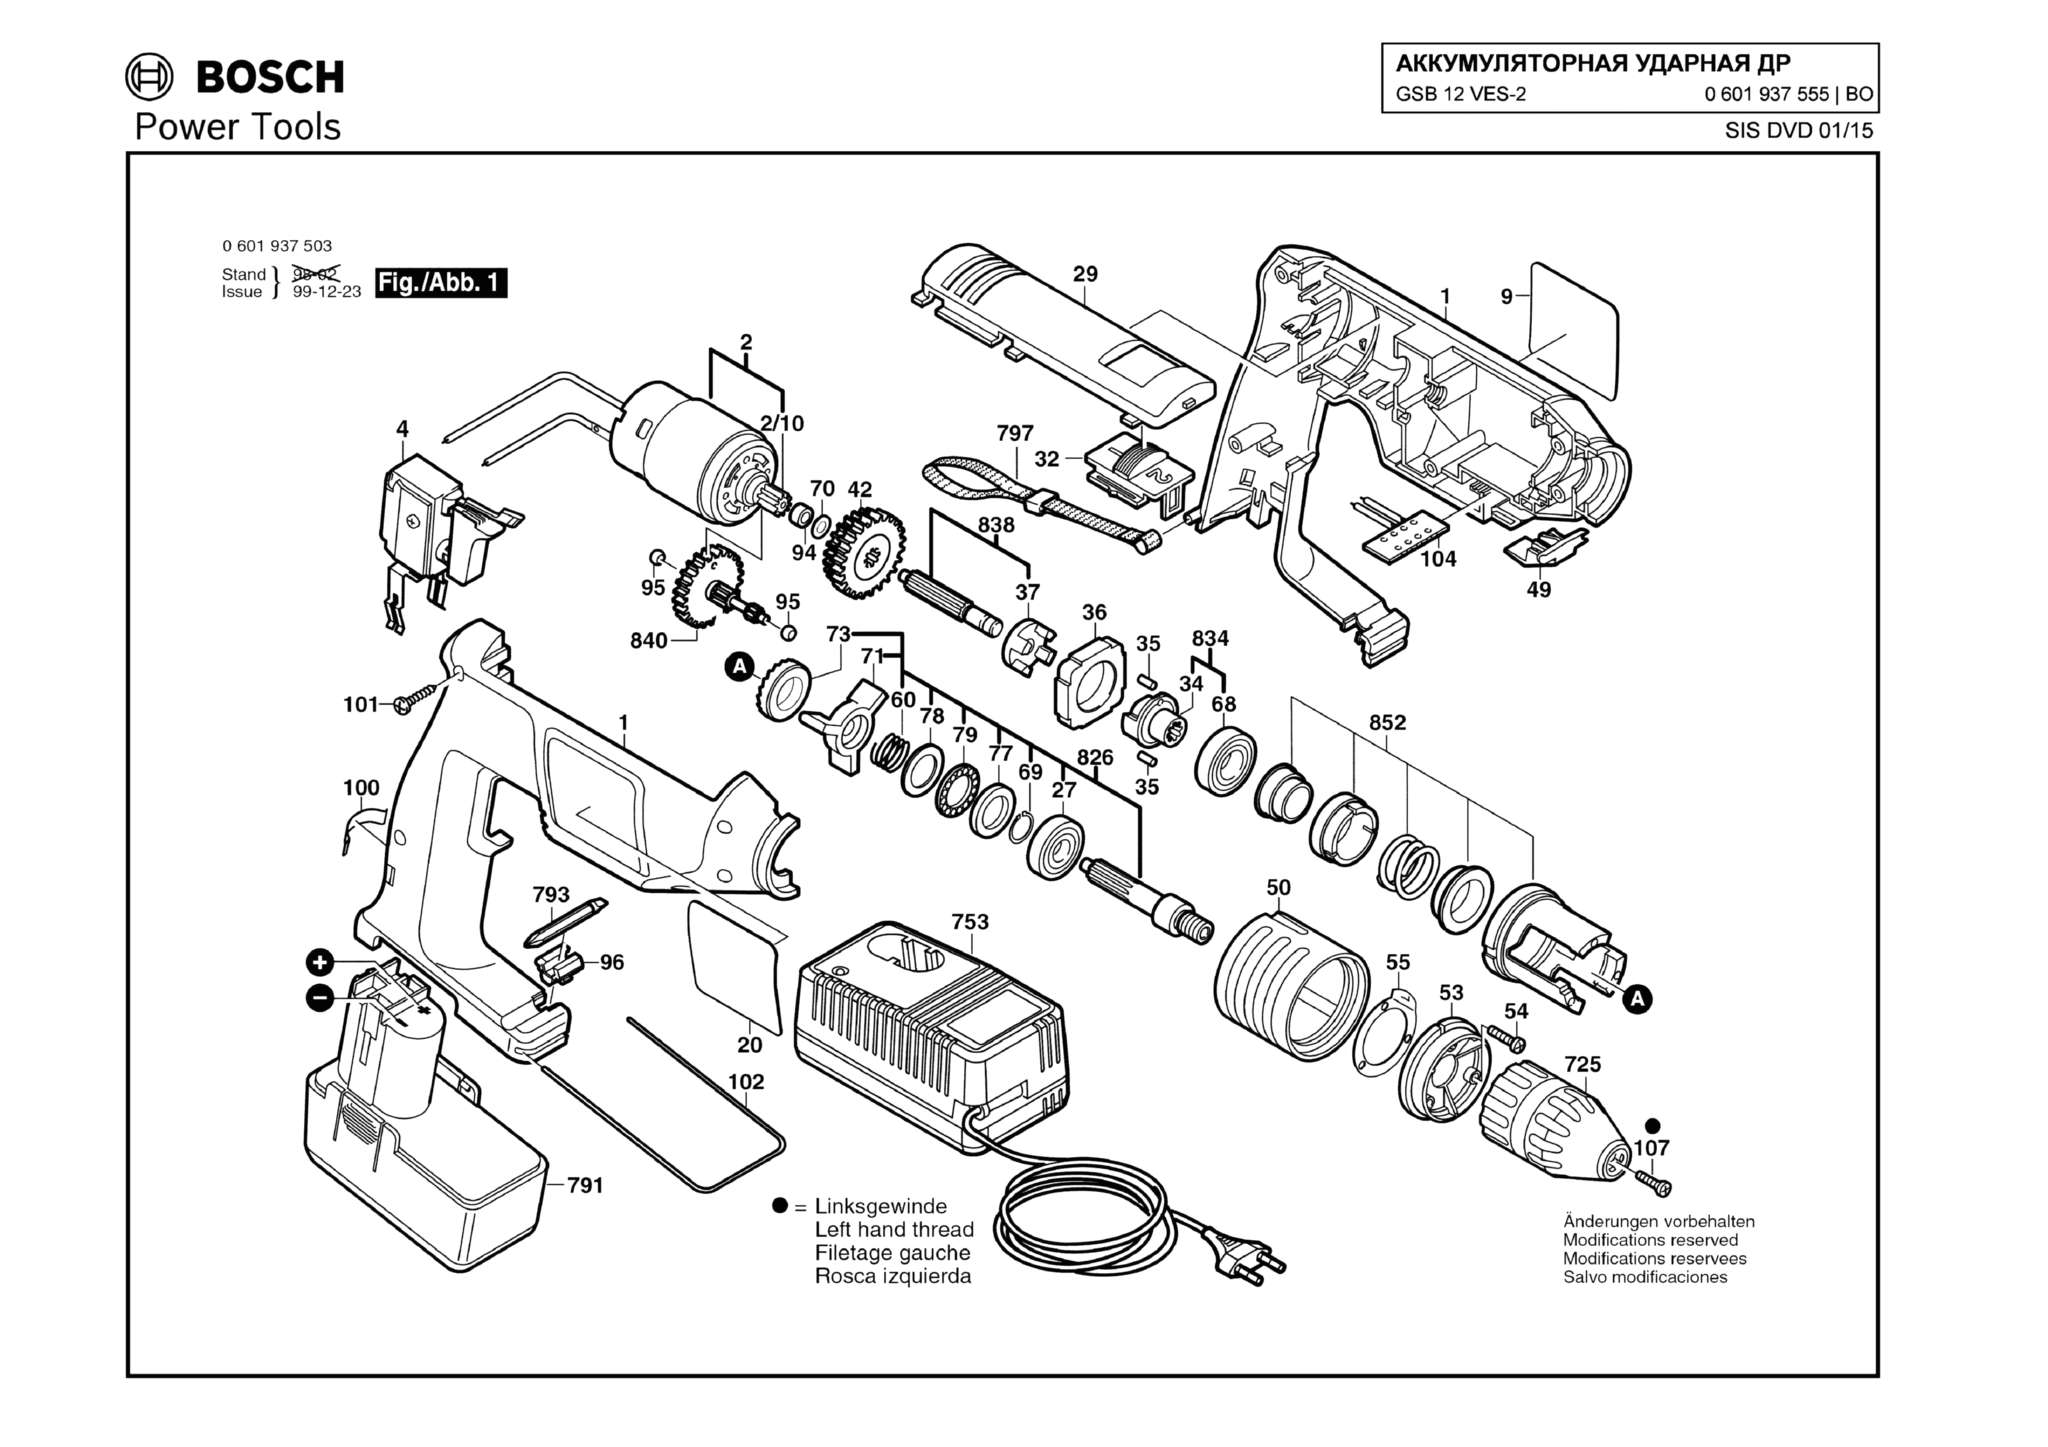 Запчасти, схема и деталировка Bosch GSB 12 VES-2 (ТИП 0601937555)